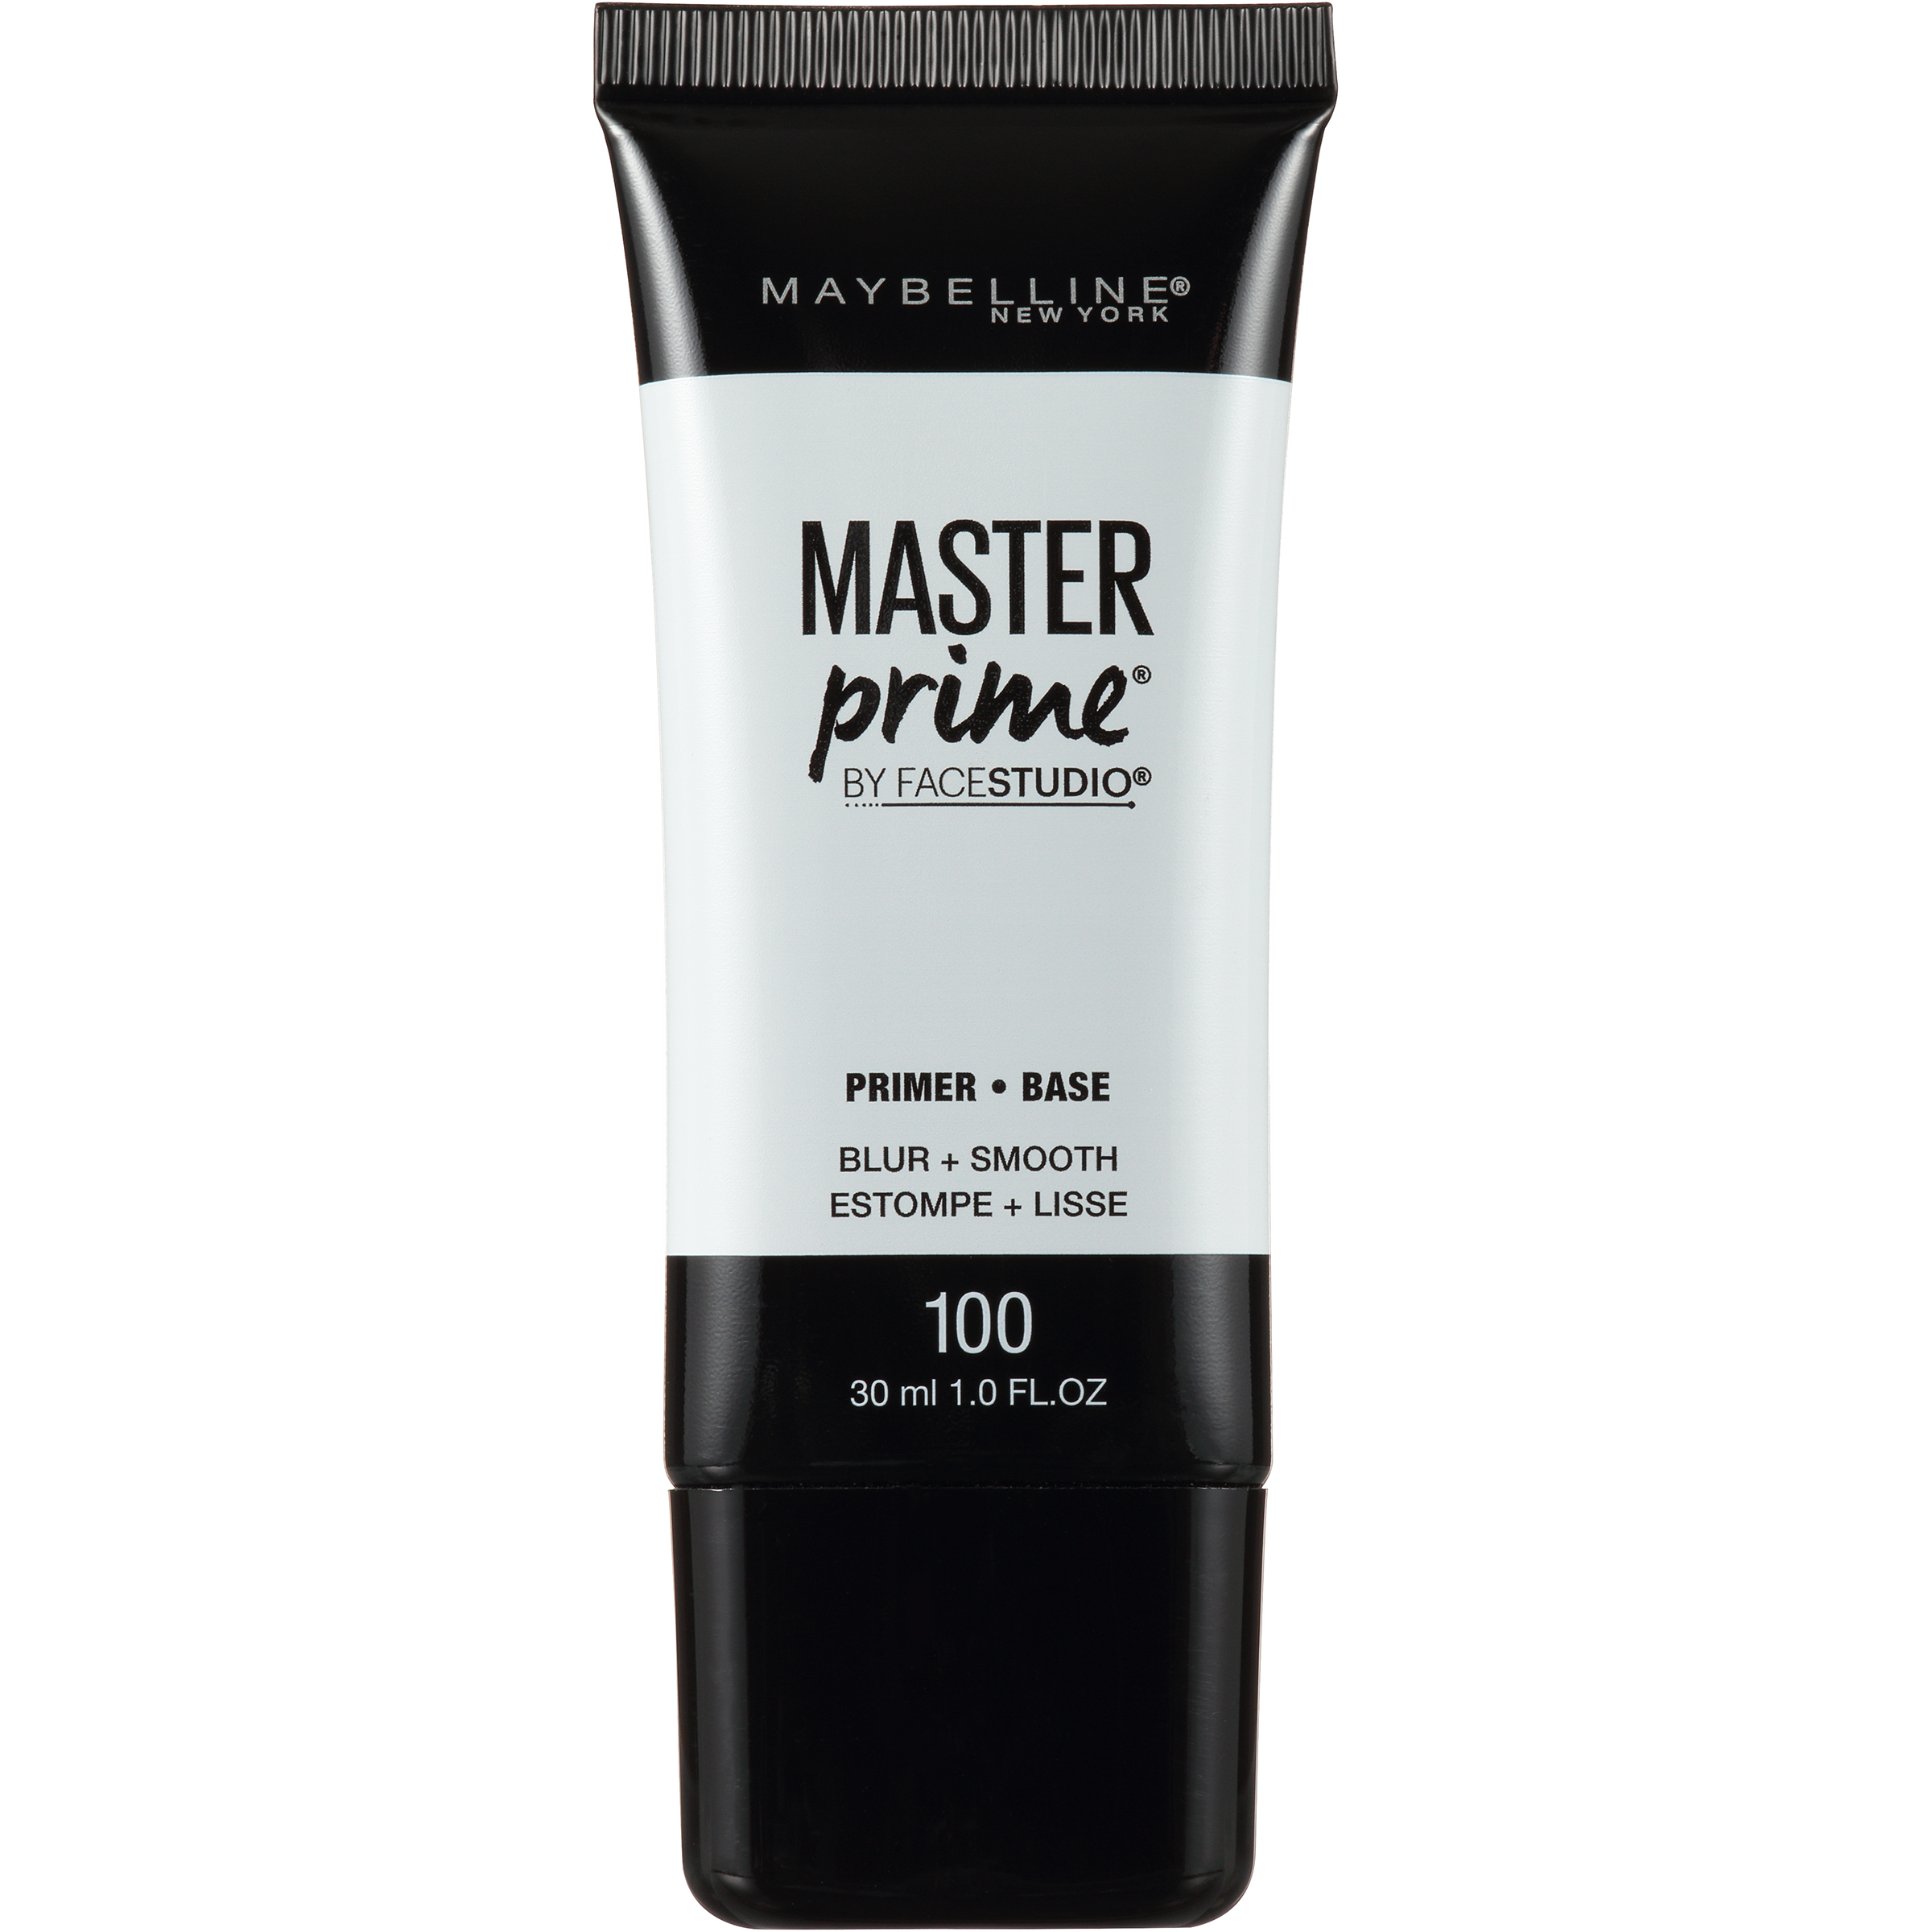 Maybelline New York Face Studio Master Prime Makeup, Blur plus Smooth, 1 fl oz